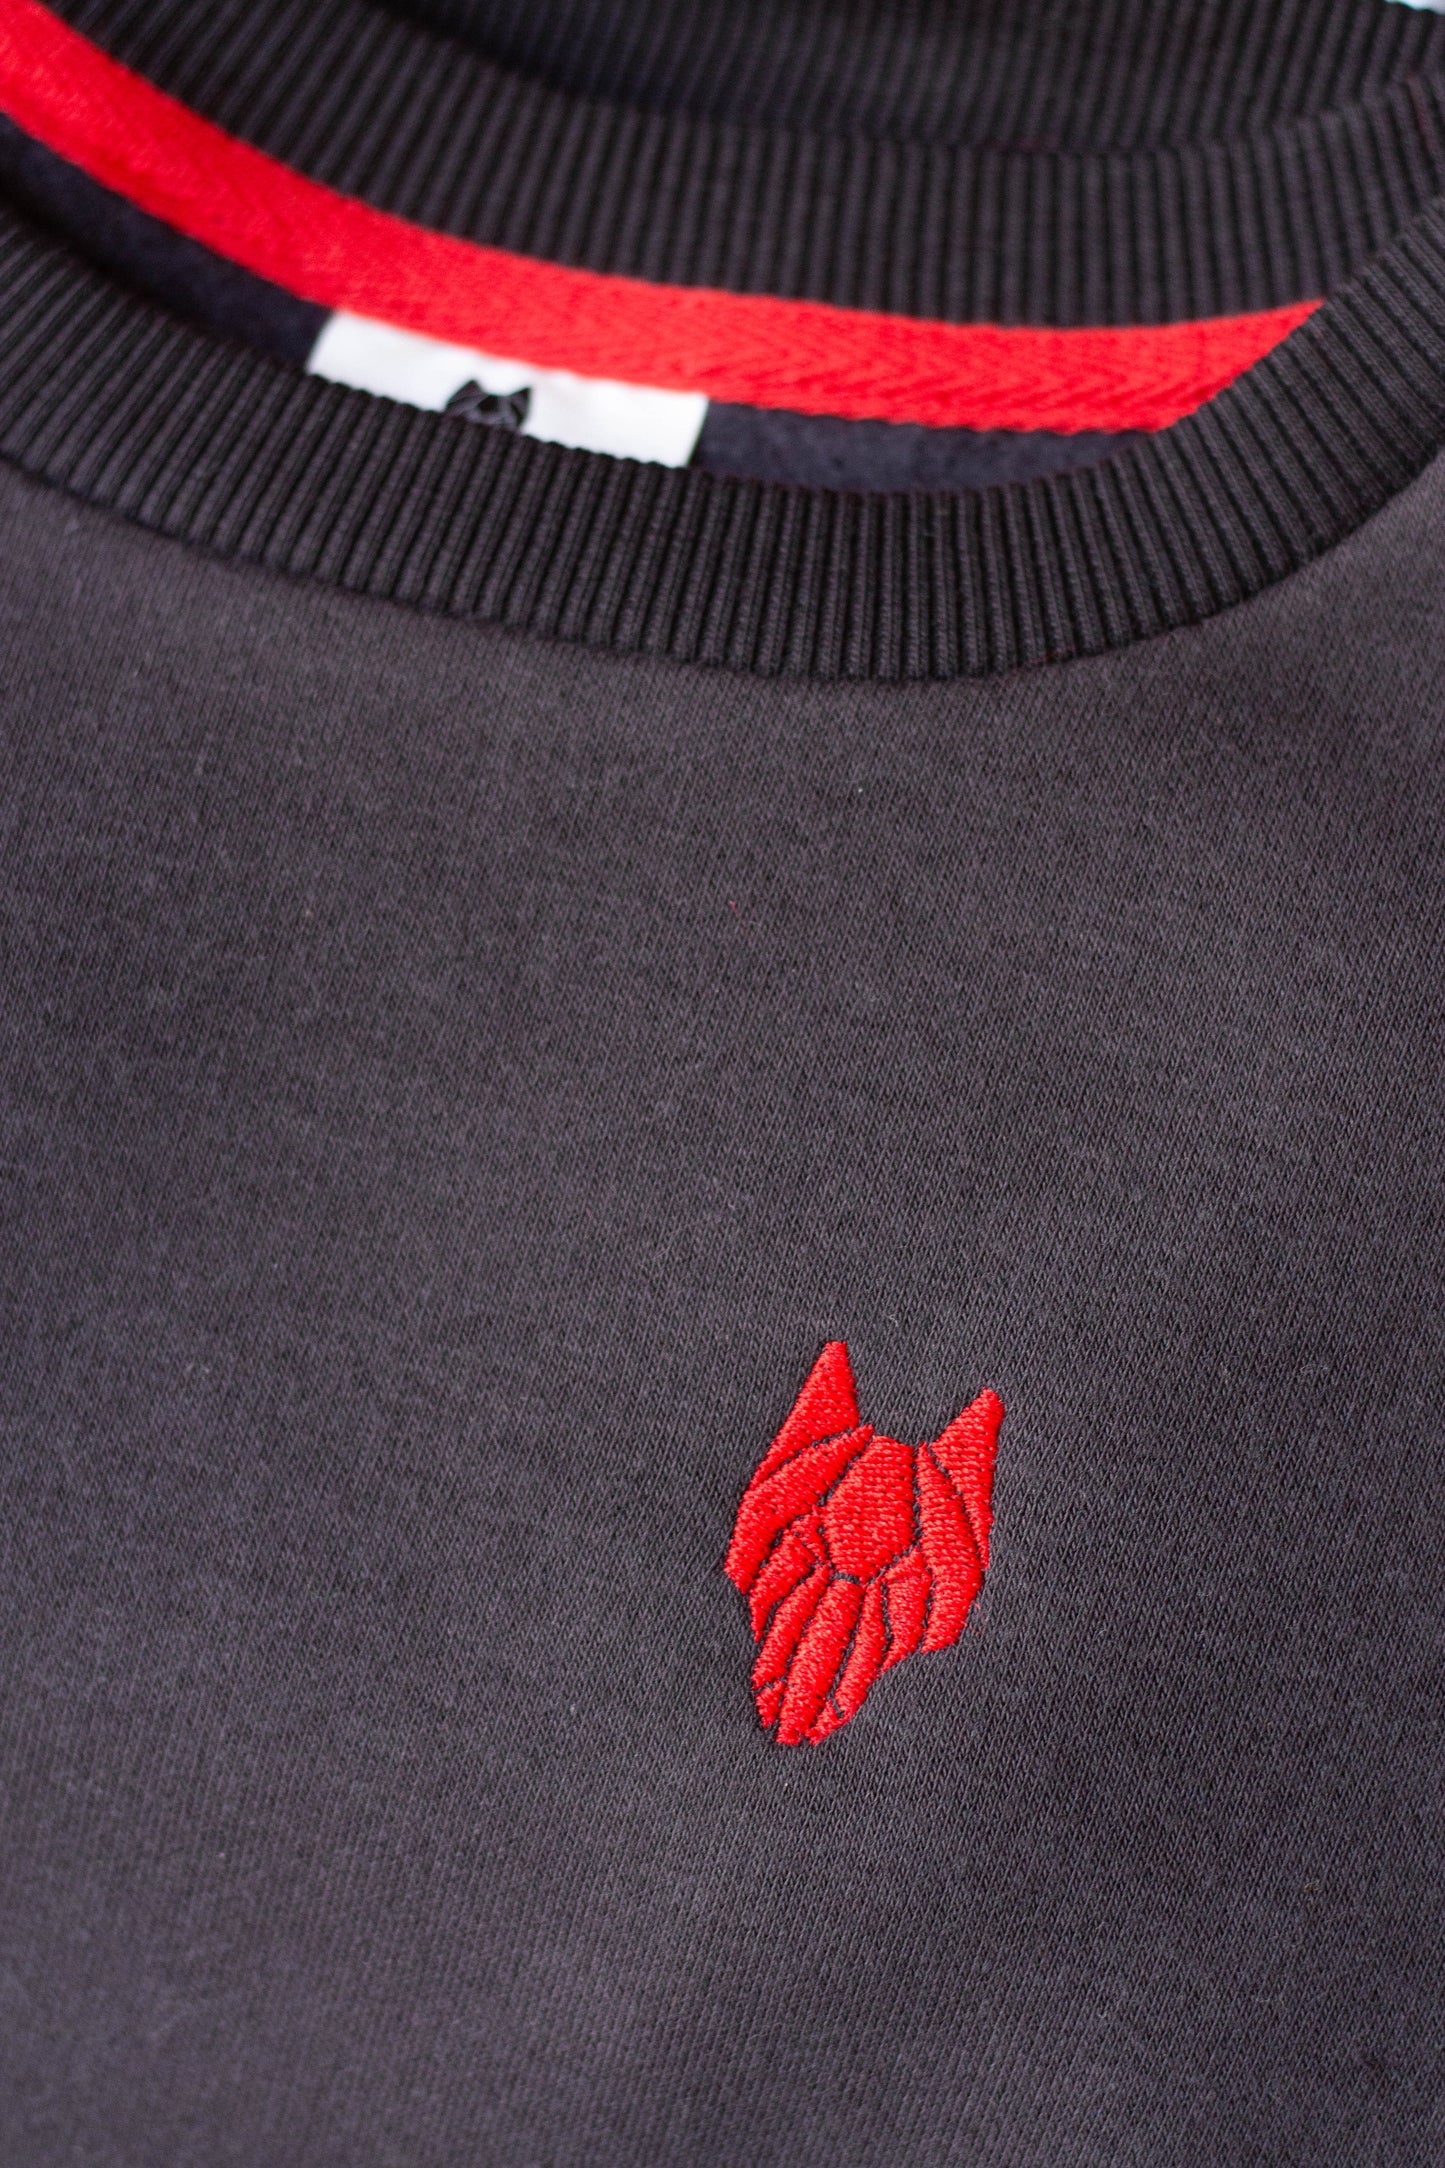 Kid’s One Wolf sweater, dark grey with red logo